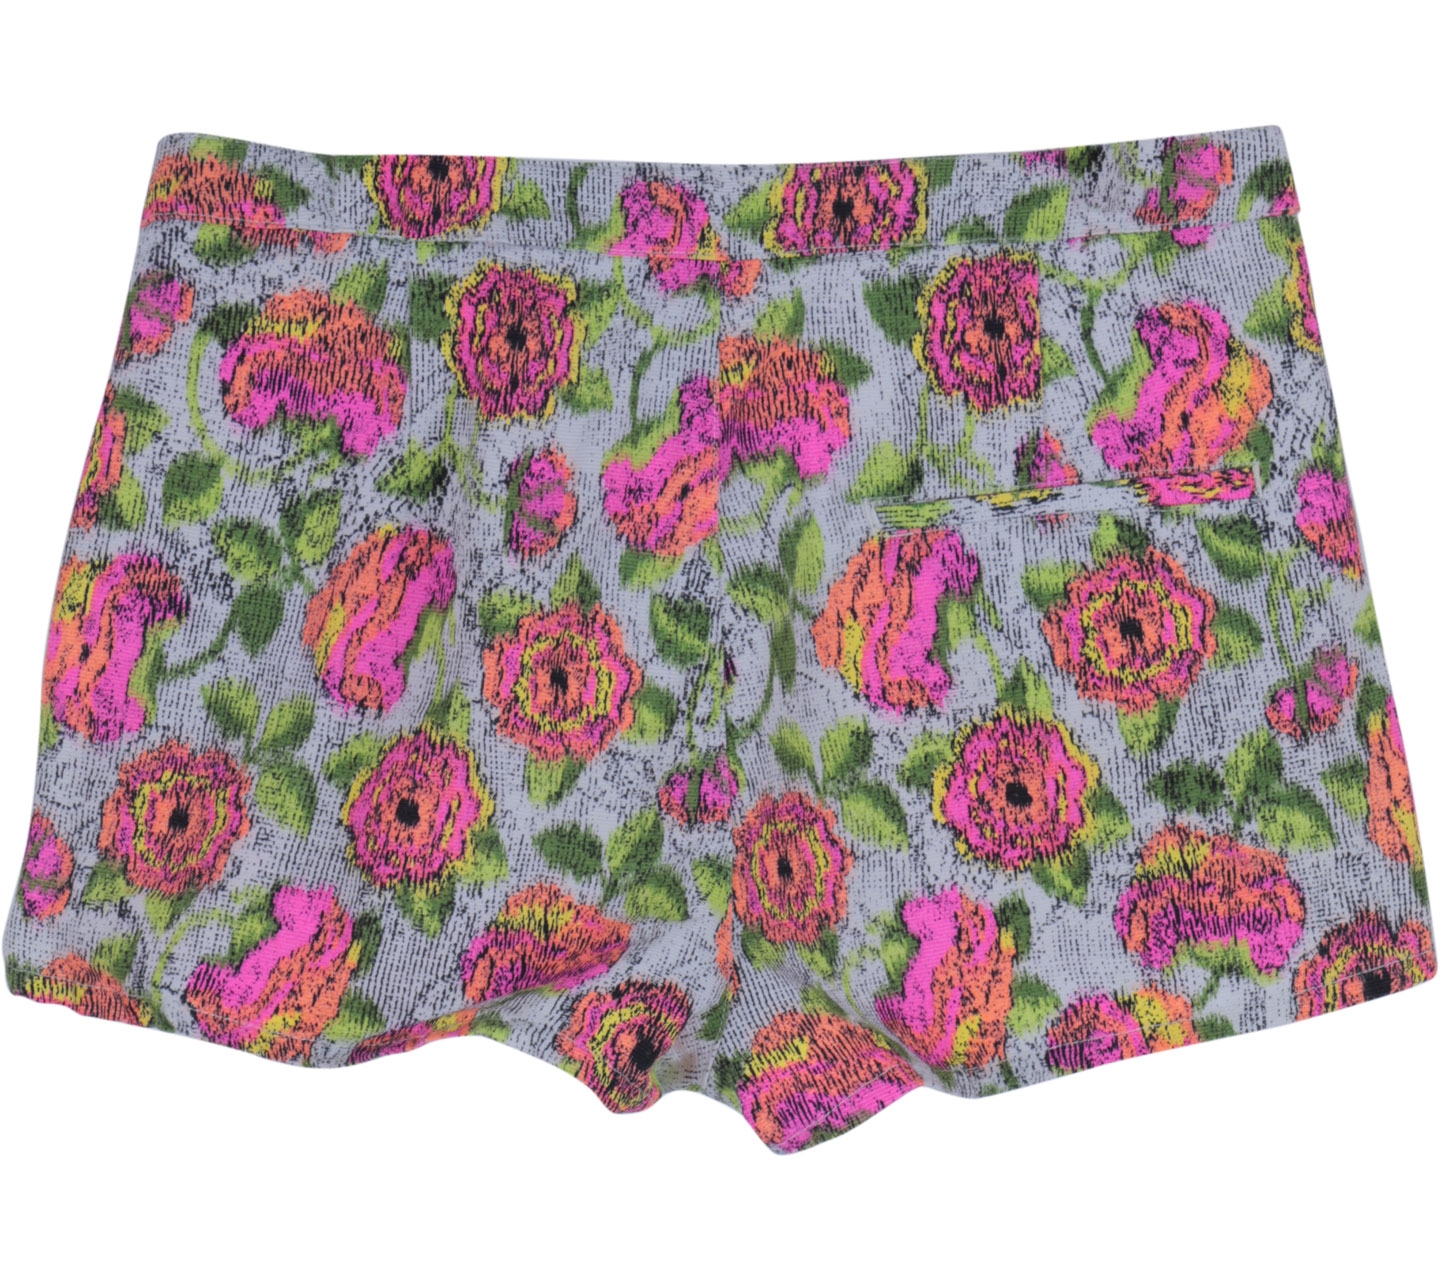 Zara Multi Colour Floral Shorts Pants